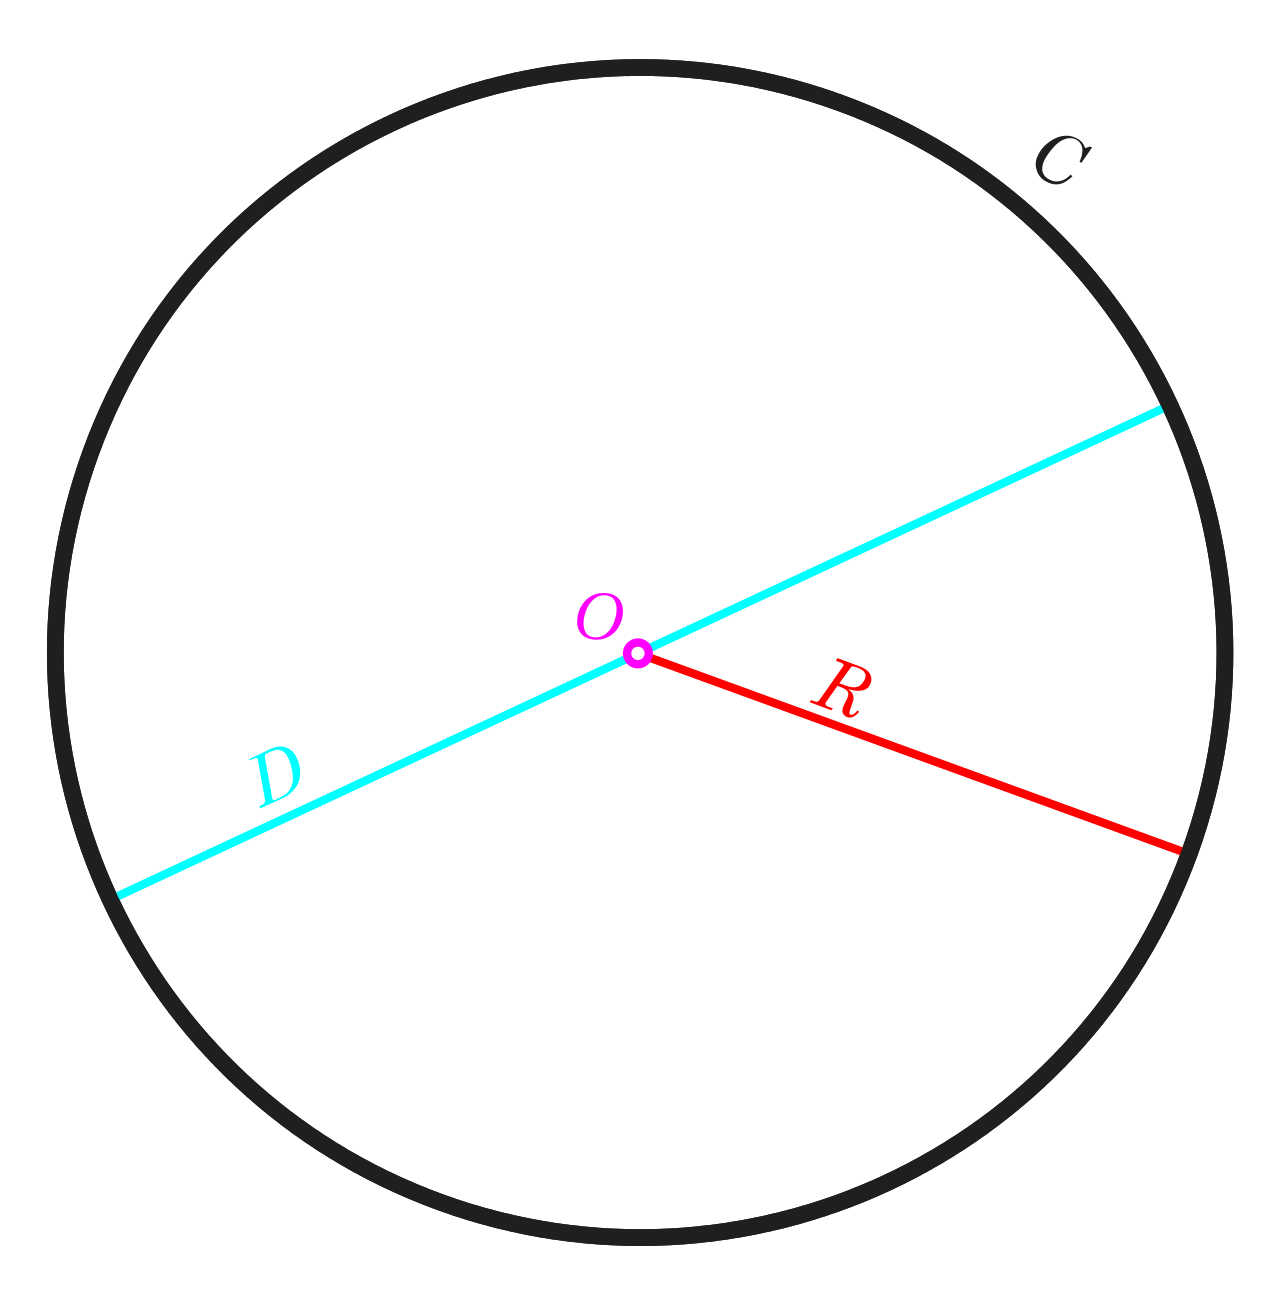 [Circumference = *π* × diameter = 2*π* × radius.](https://cdn.hashnode.com/res/hashnode/image/upload/v1621430517621/6LhGpfqA7.html)